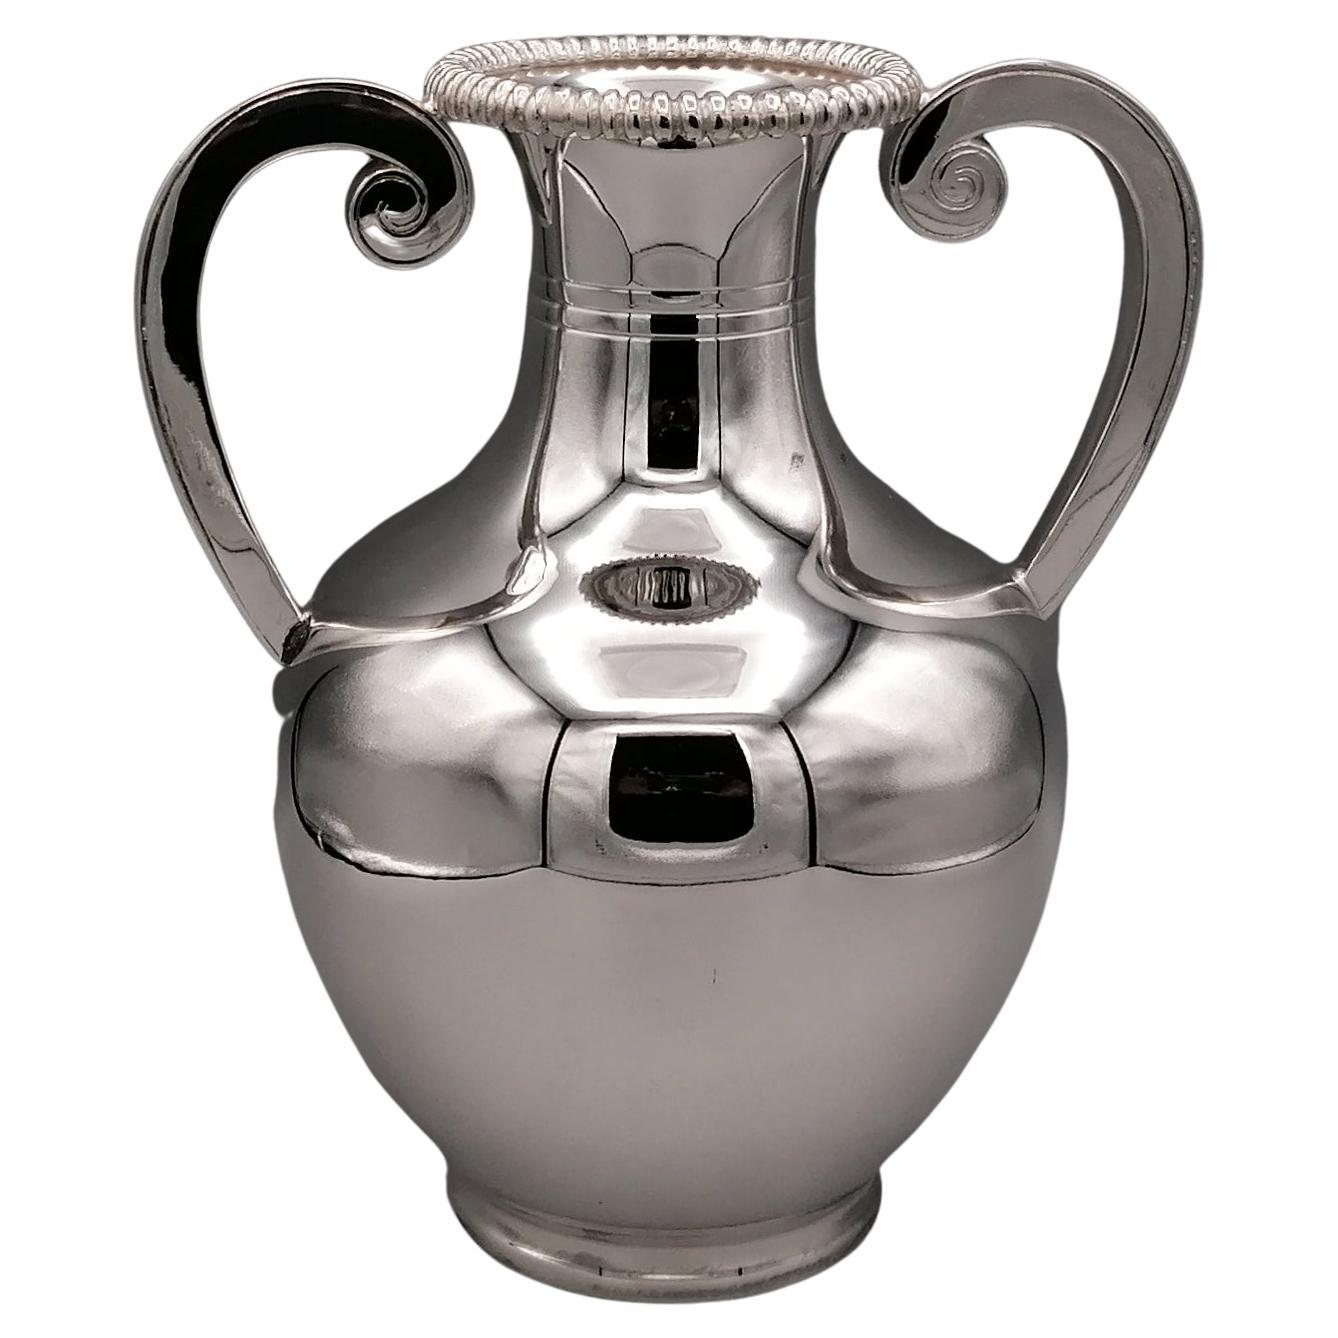 20th century Italian Solid Silver amphora vase with handles